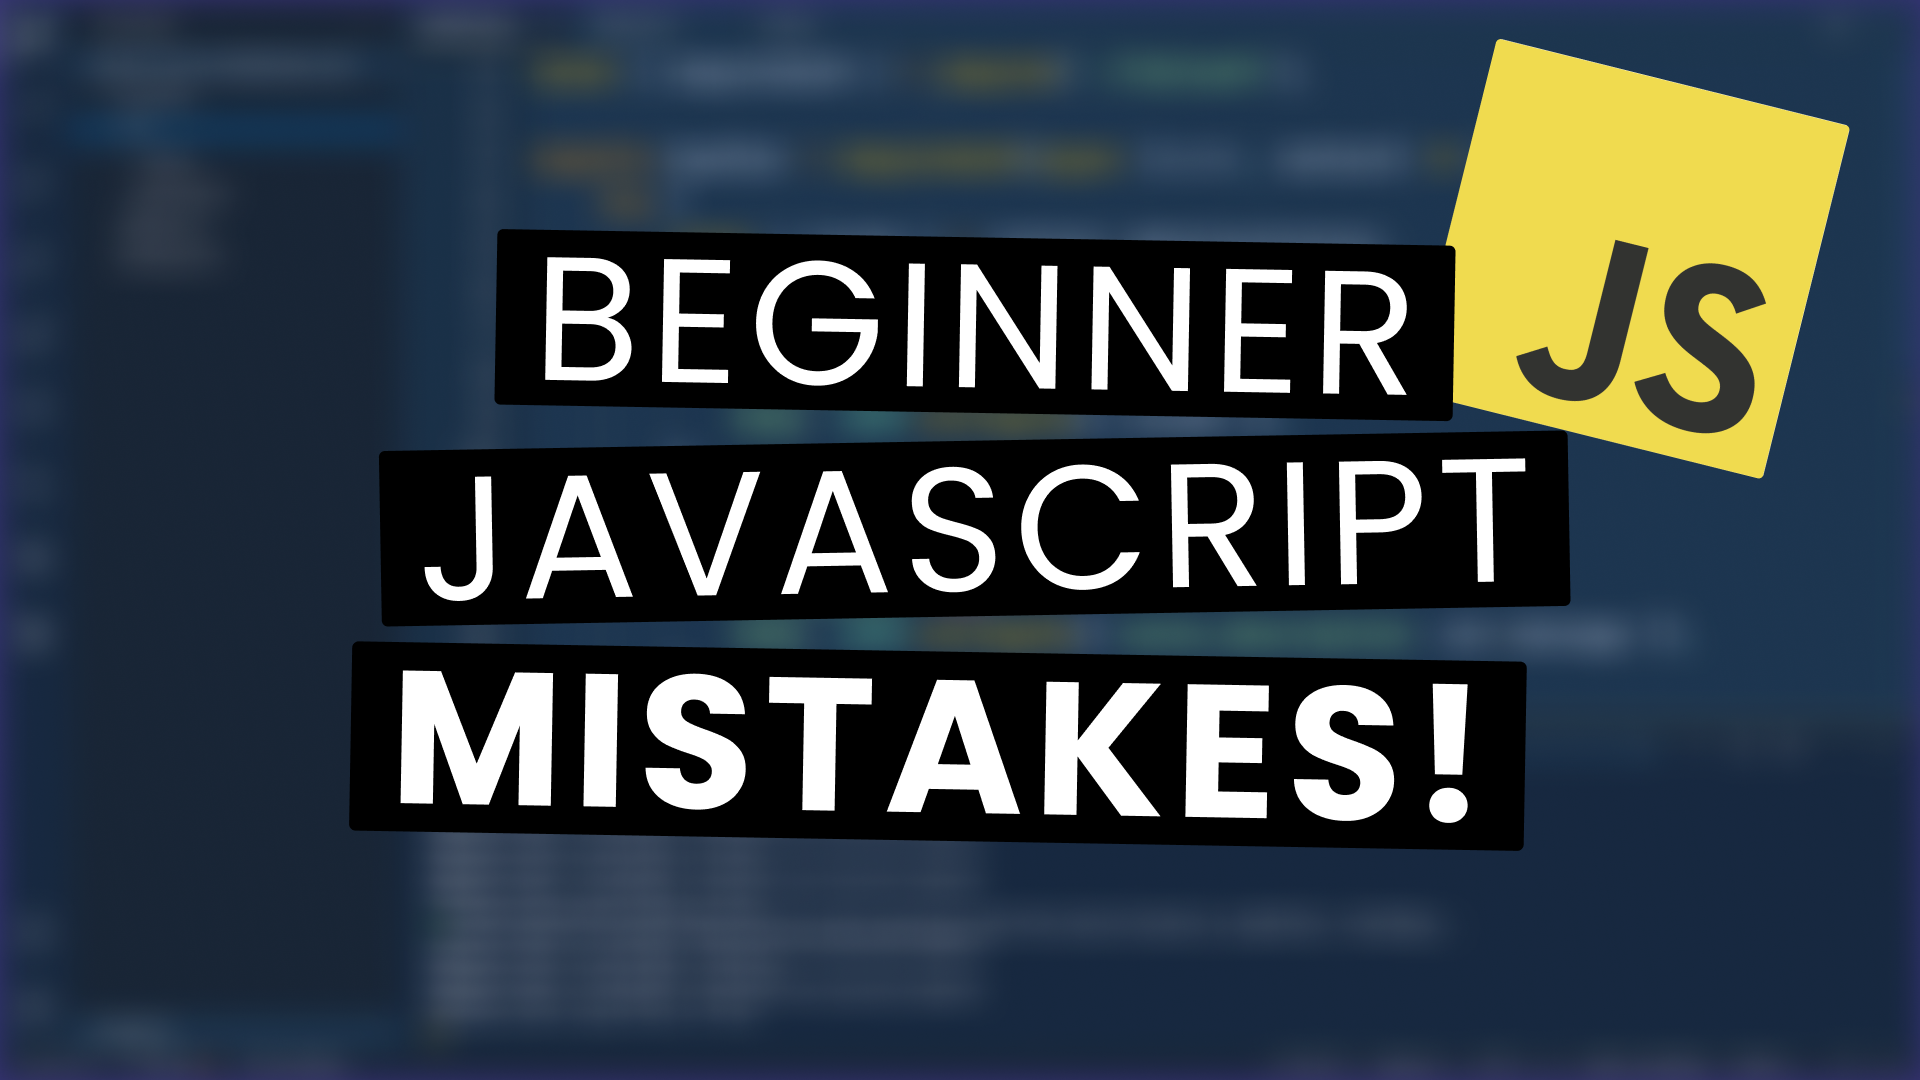 15 Common Beginner JavaScript Mistakes